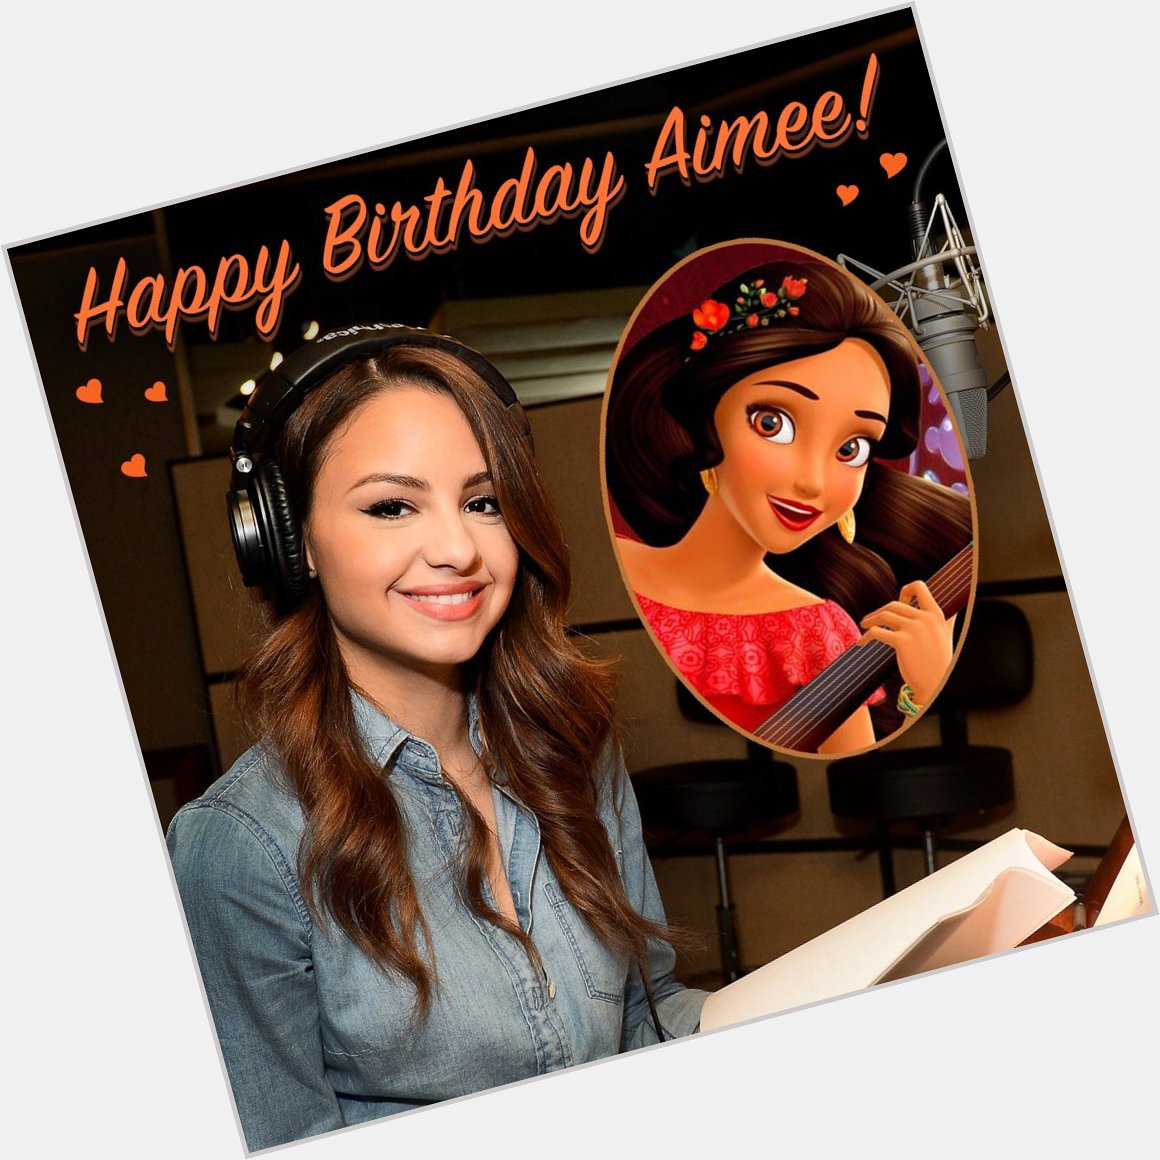 Happy Birthday Aimee Carrero!    